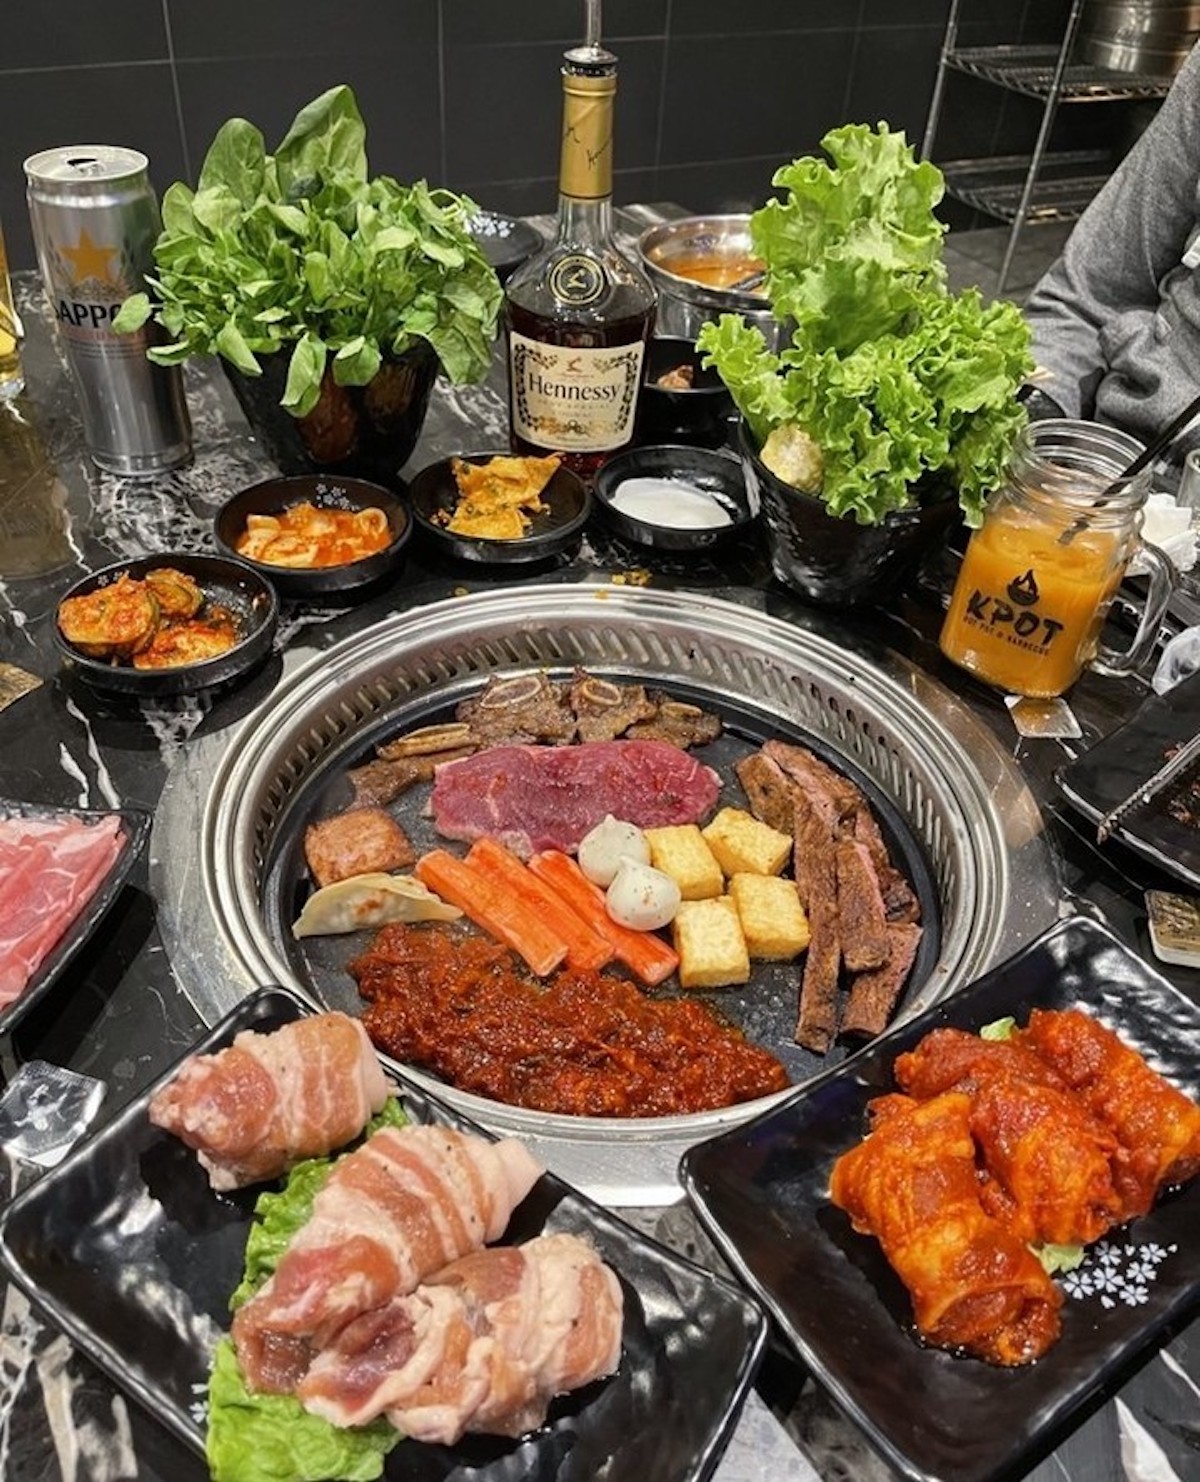 KPOT Korean BBQ & Hot Pot to open in Wauwatosa